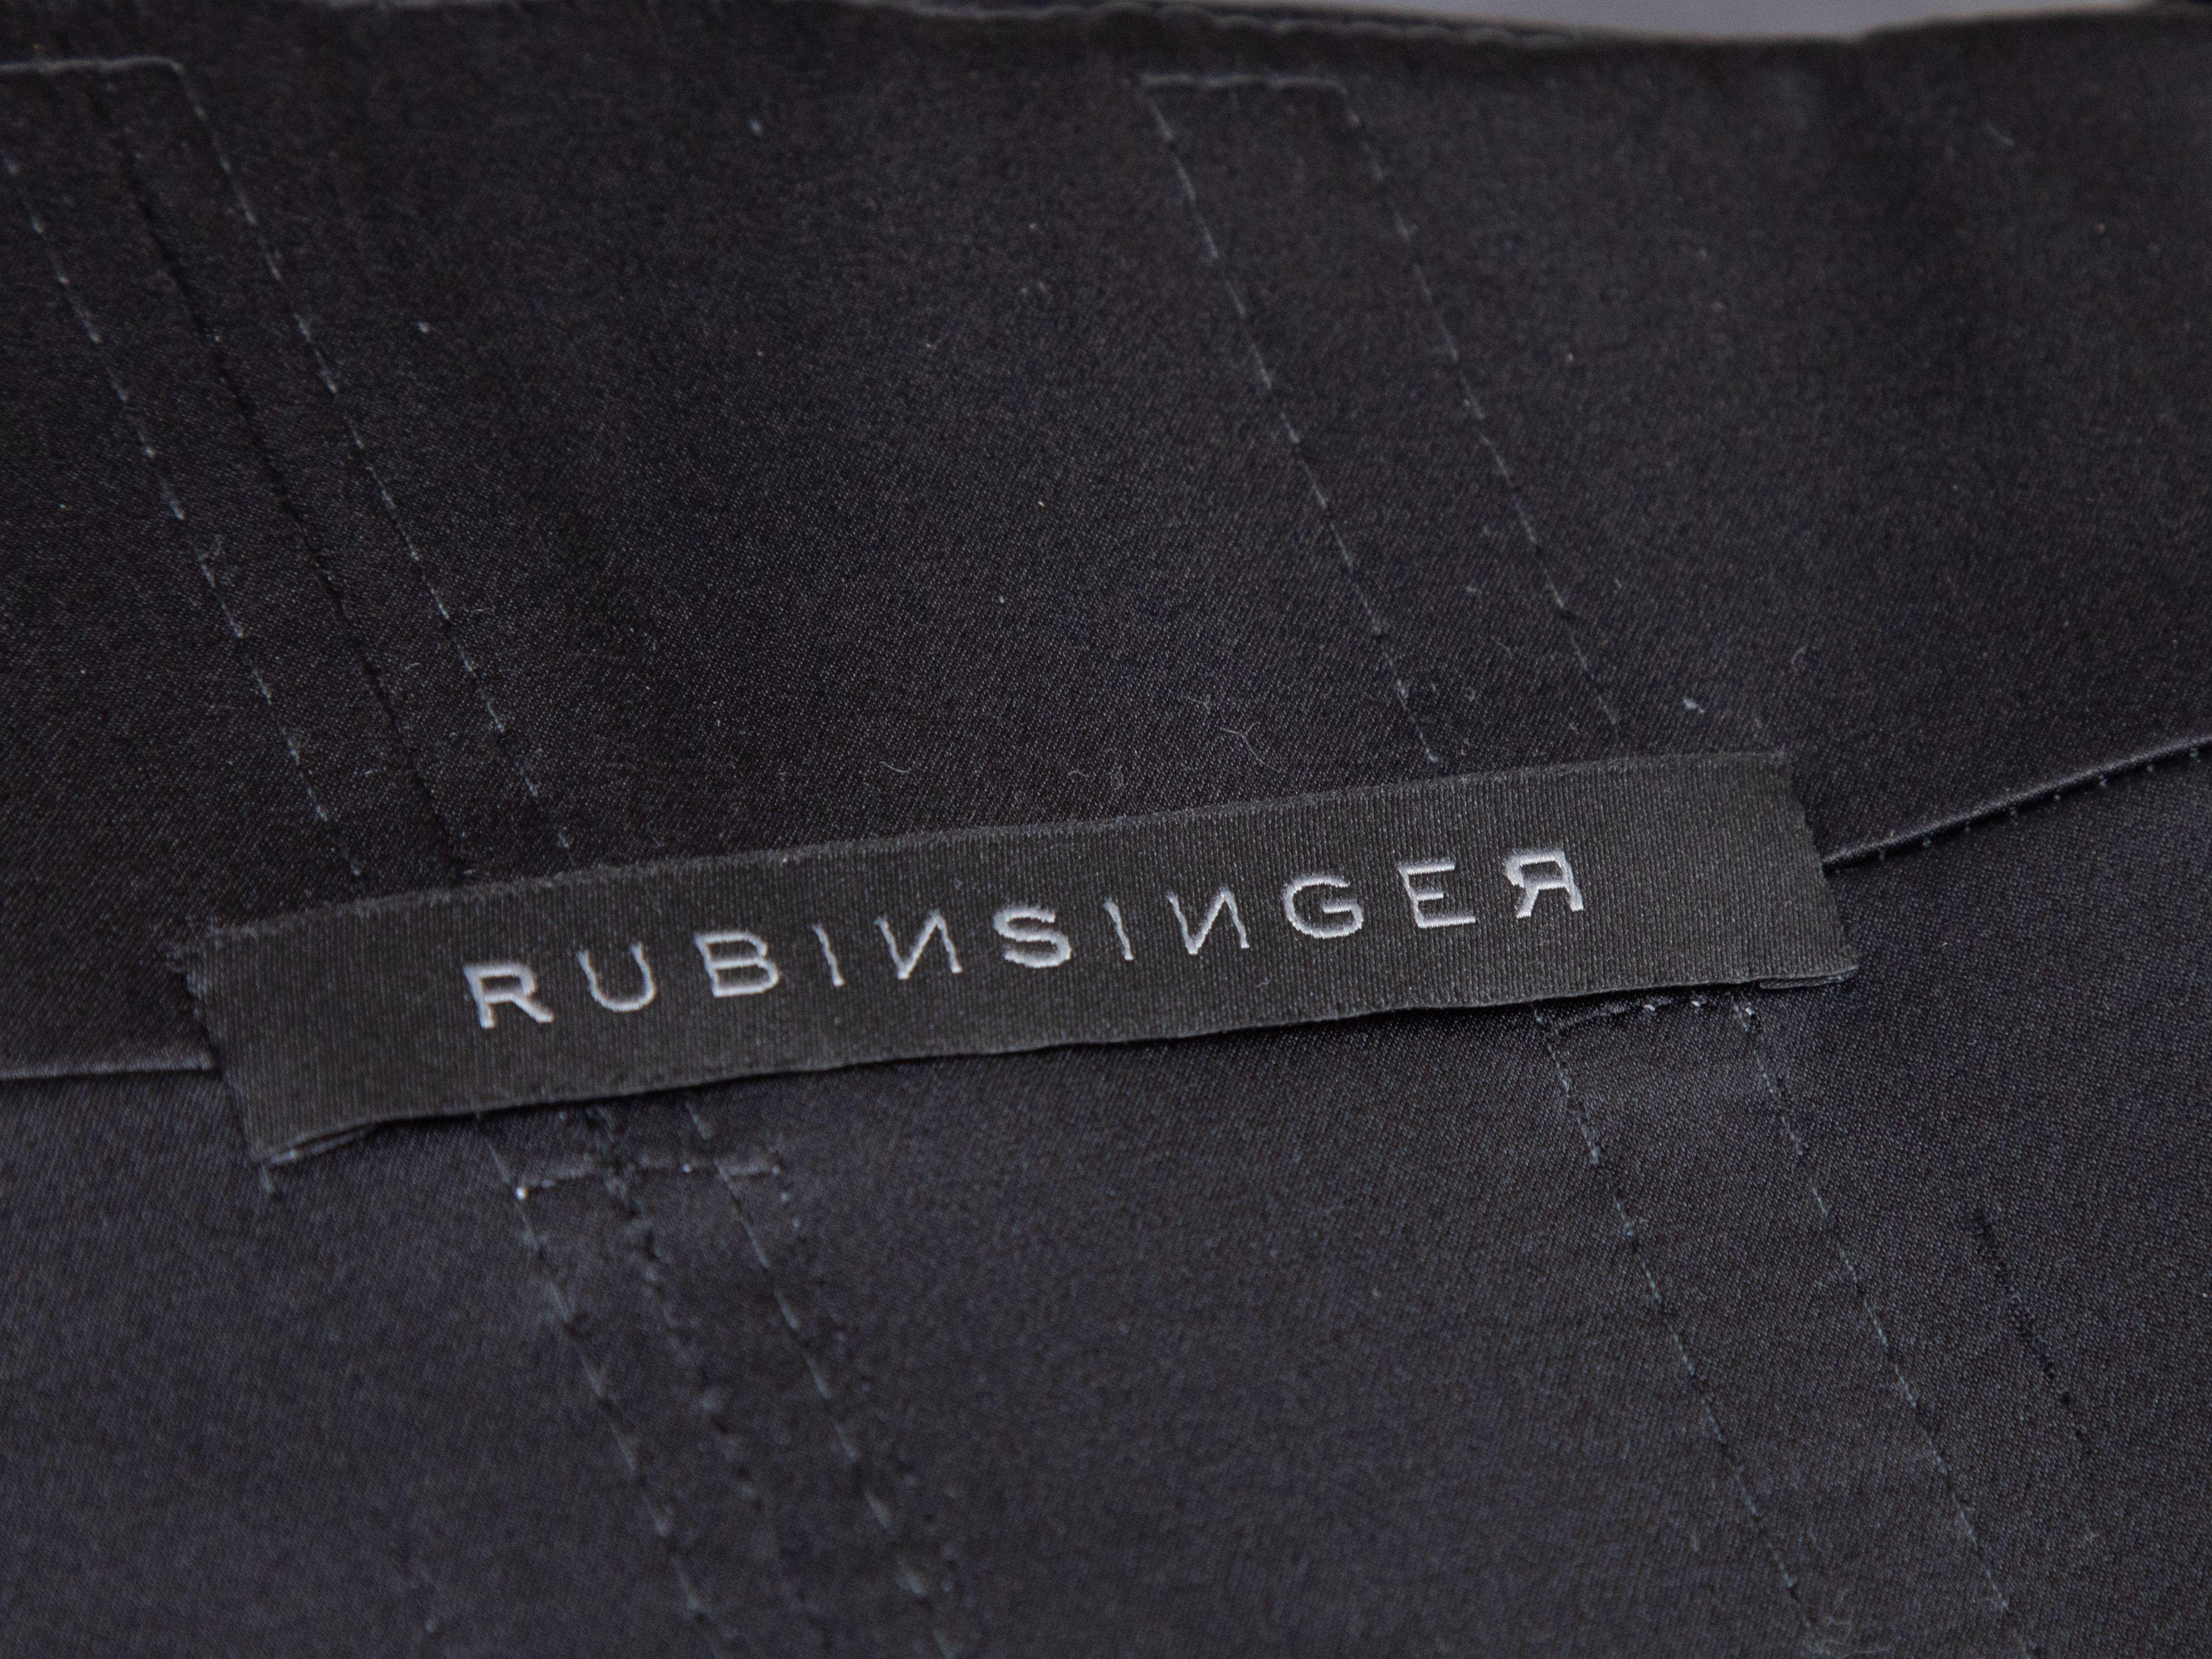 Product Details: Black leather strapless bustier top by Rubin Singer. Straight neckline. Asymmetrical hem. Zip closure at center back. 36